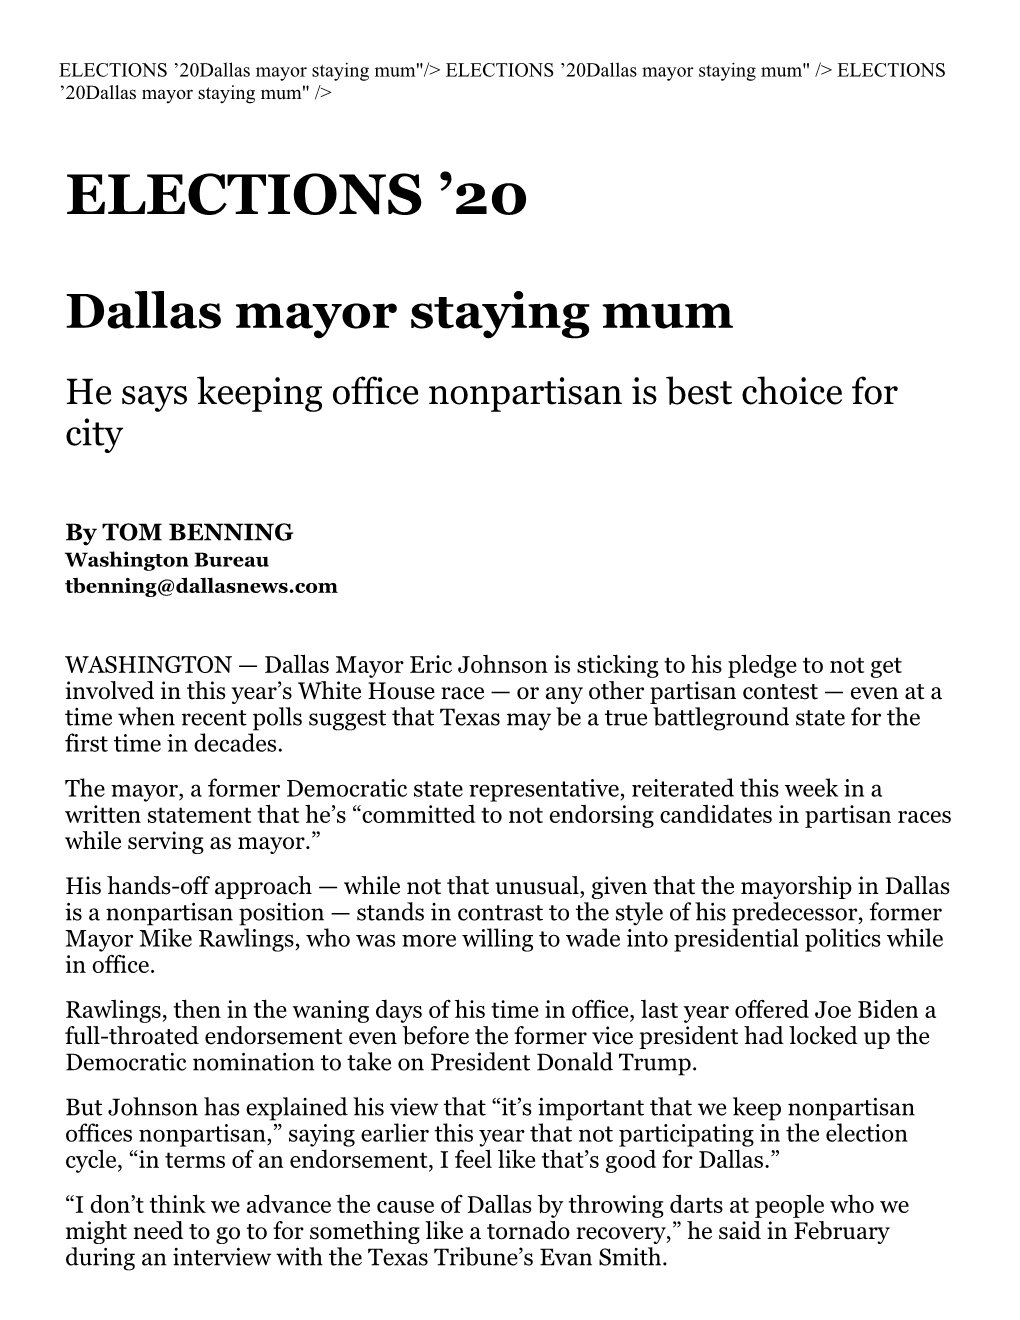 ELECTIONS ’20Dallas Mayor Staying Mum"/> ELECTIONS ’20Dallas Mayor Staying Mum" /> ELECTIONS ’20Dallas Mayor Staying Mum" />